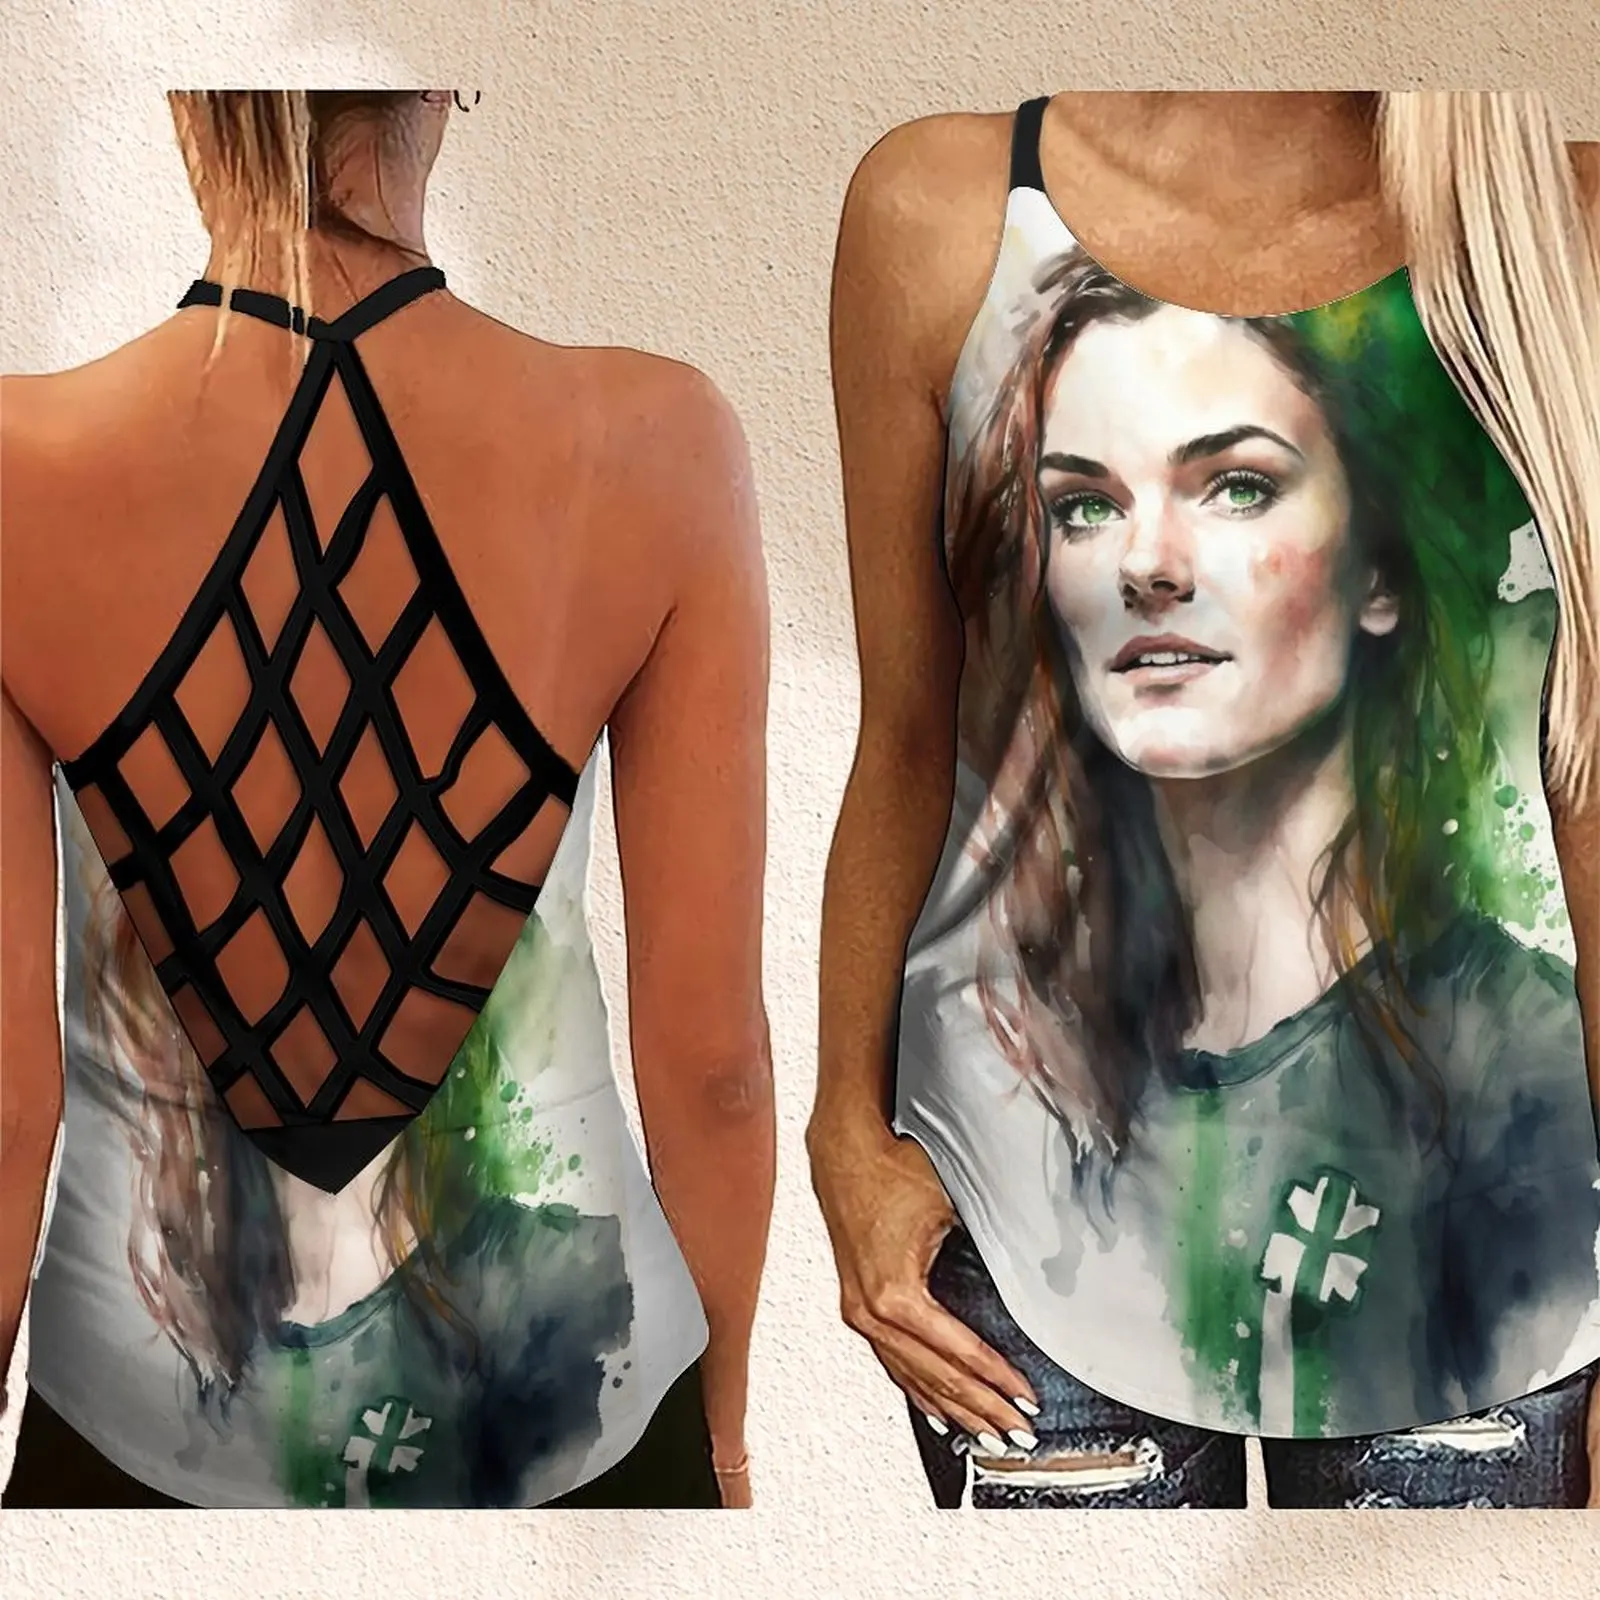 Summer Women's Hollow Out Sleeveless Cross Cross Tank Top New Everyone Loves An Irish Girl Watercolor Print Yoga Top